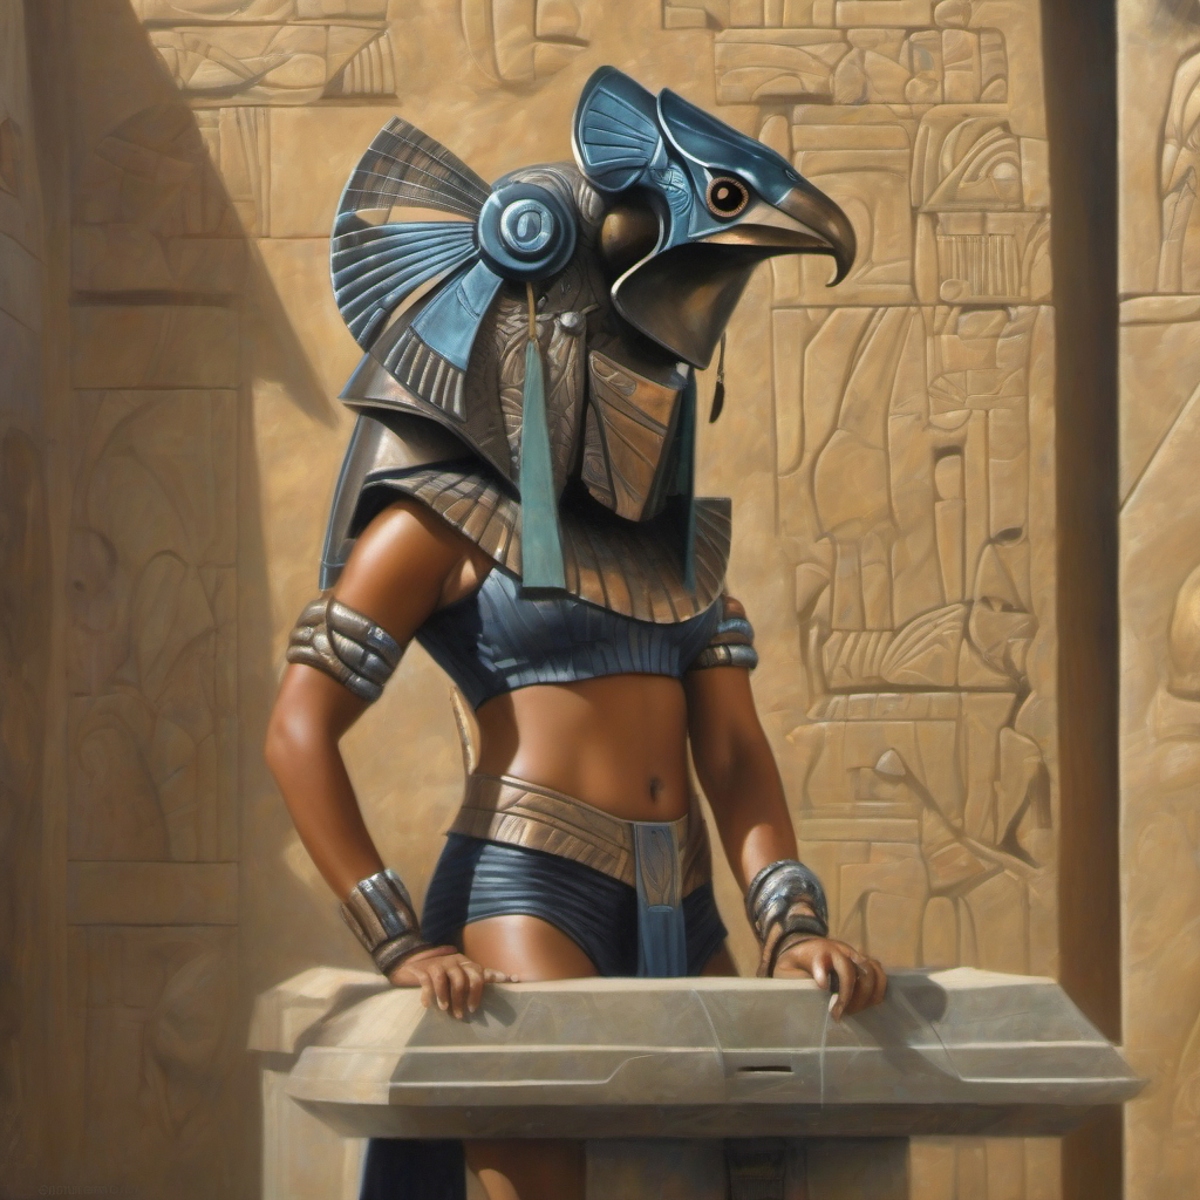 Stargate Horus image by Torque